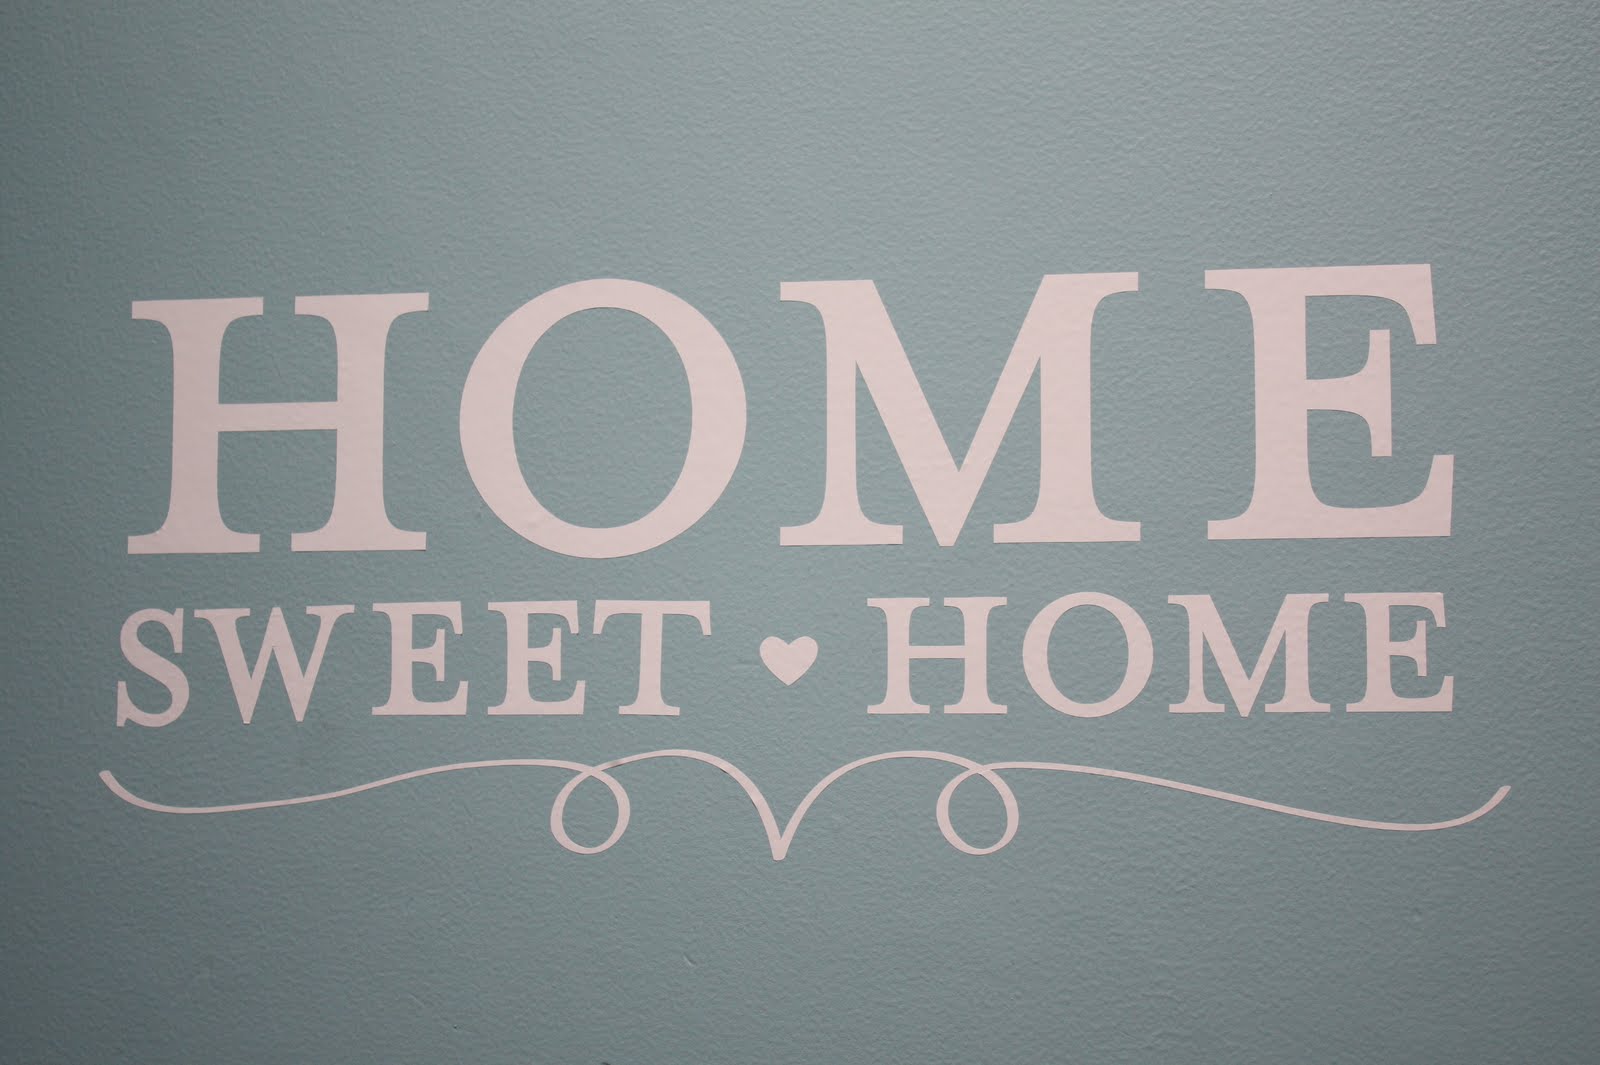 Home sweet home 5. Номе Sweet Home. Табличка Sweet Home. Хоум Свит хоум табличка. Фоновое изображение для Home Sweet Home.